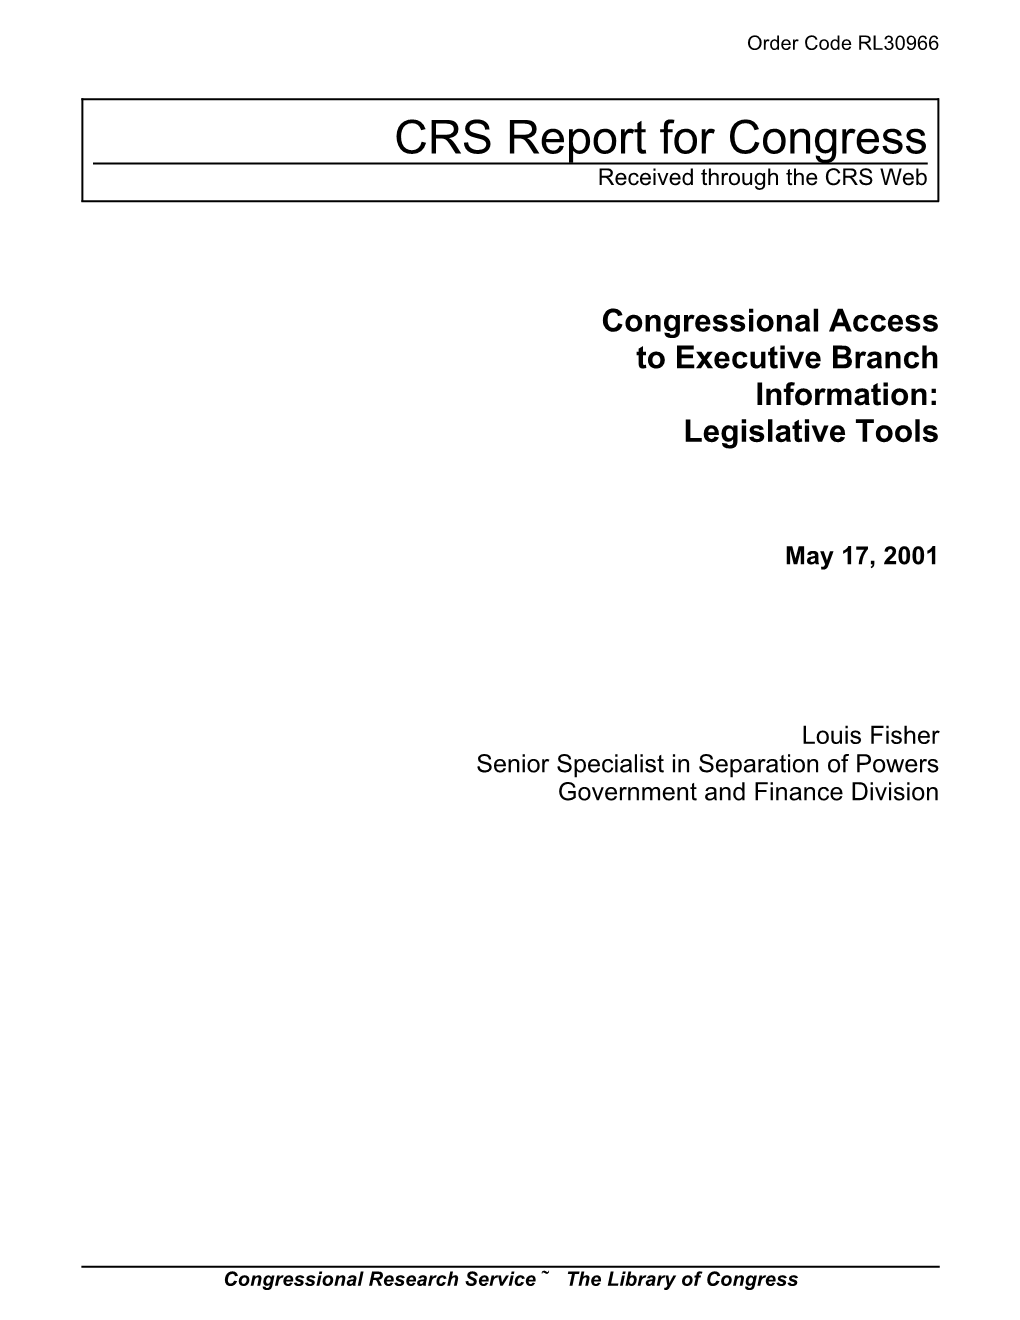 Congressional Access to Executive Branch Information: Legislative Tools